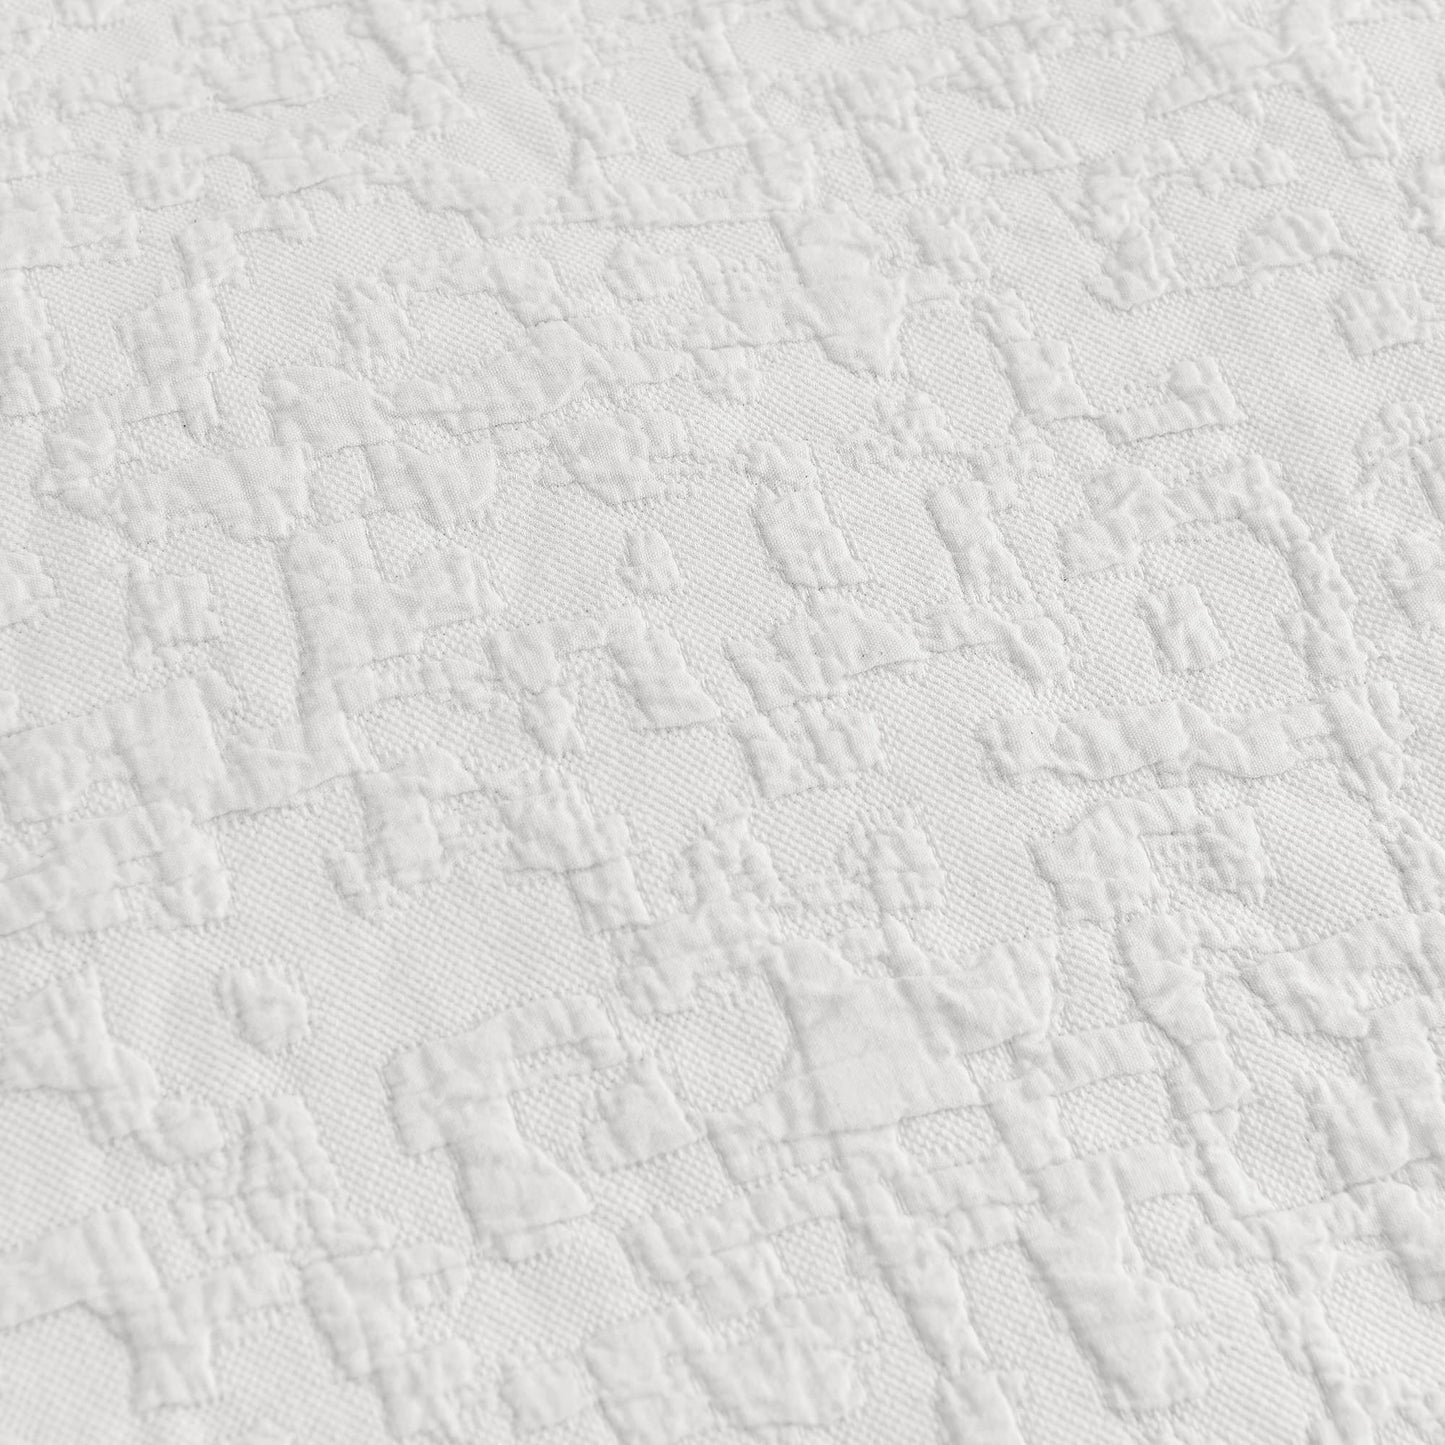 HiEnd Accents Porto Matelassé 3 Piece Comforter Set with Pillow Shams, Super King Size, Cotton Vintage White Textured Modern Boho Chic Casual Luxury Bedding, 1 Comforter, 2 Pillowcases